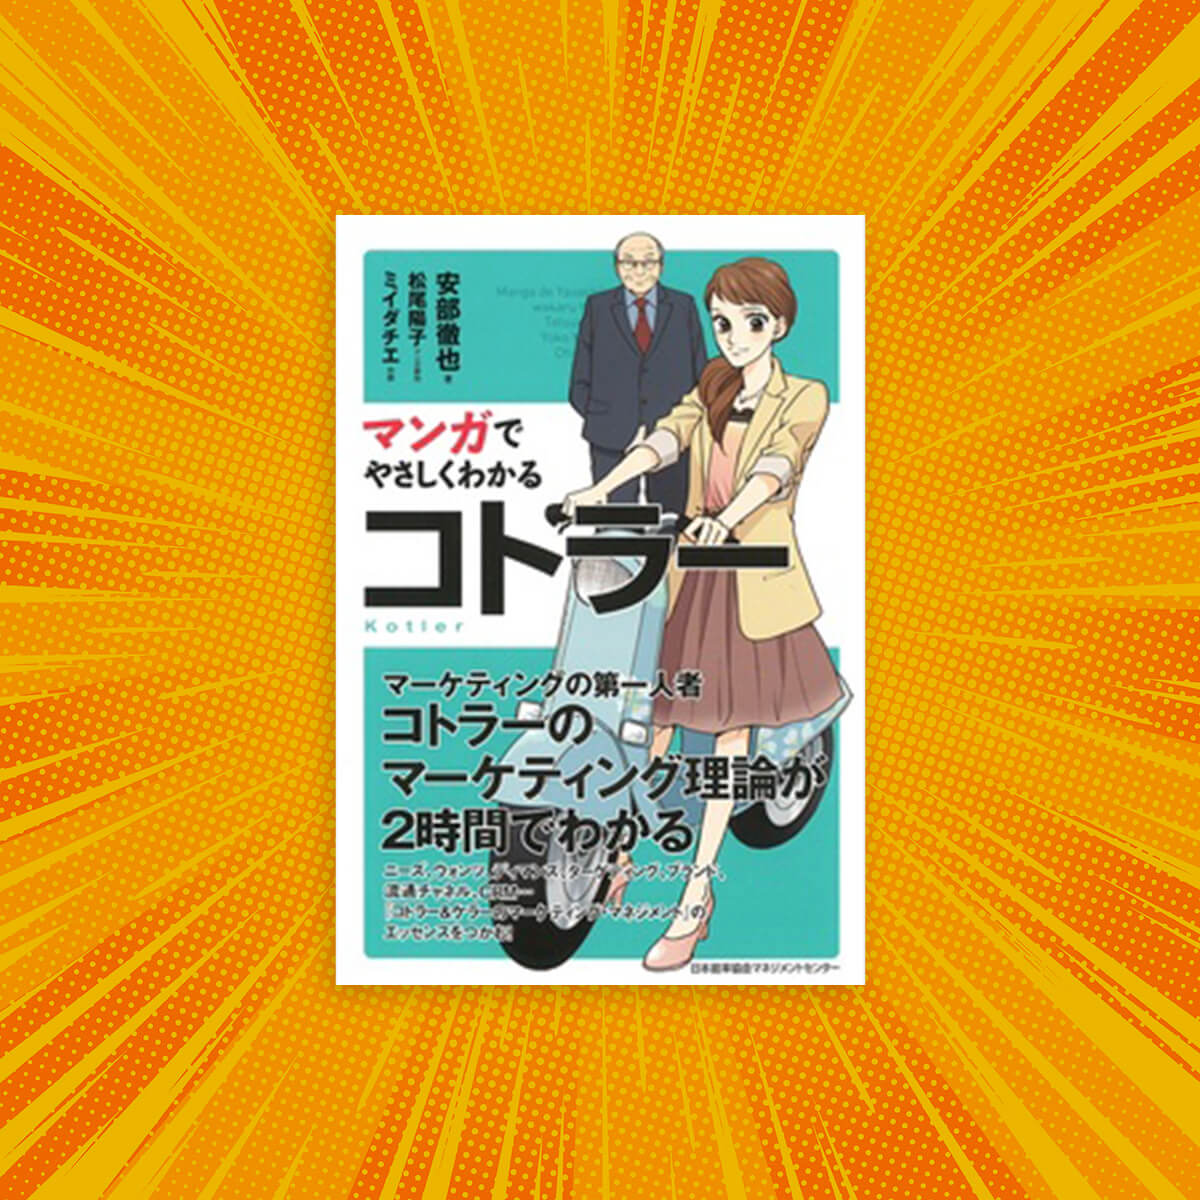 Easy reading through Manga | Kotler